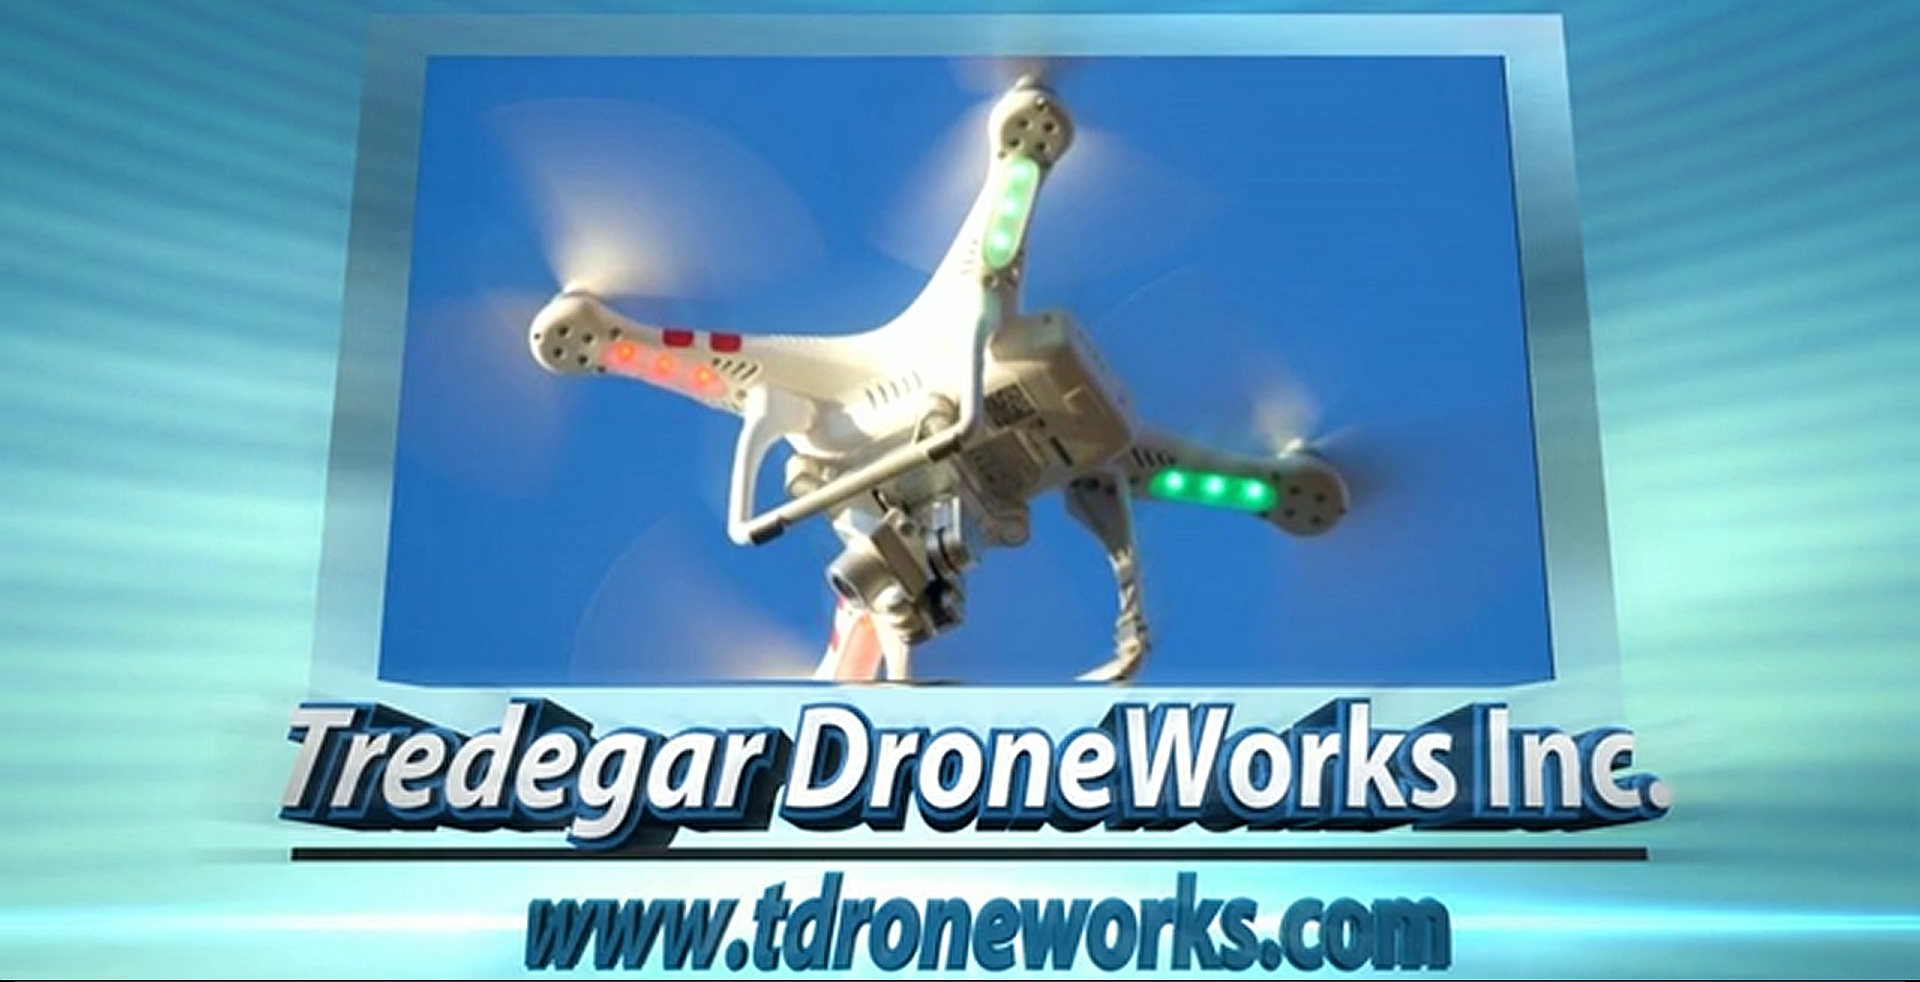 Tredegar DroneWorks